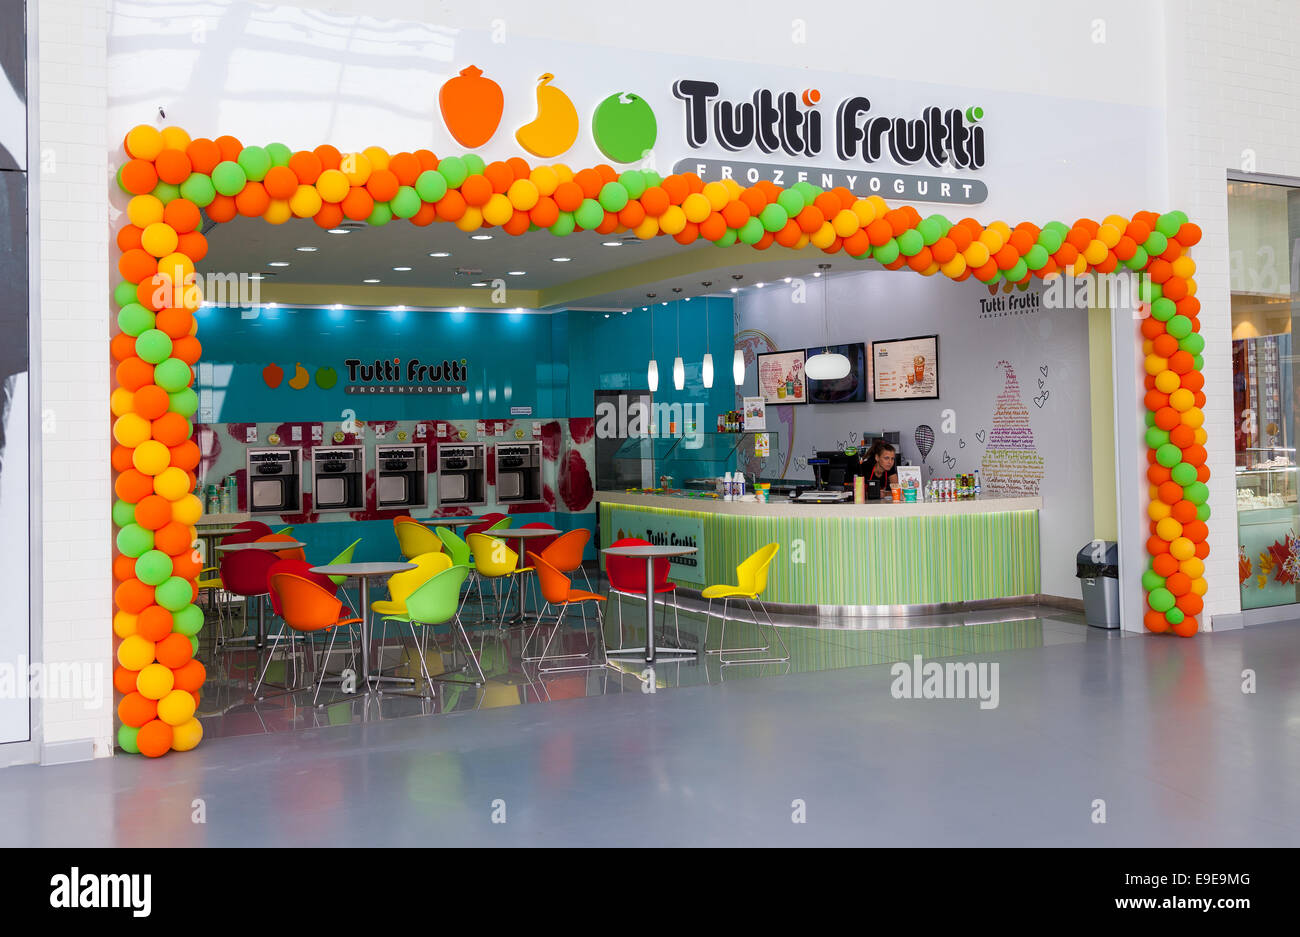 Tutti Frutti Frozen Yogurt branch in a shopping center Stock Photo - Alamy